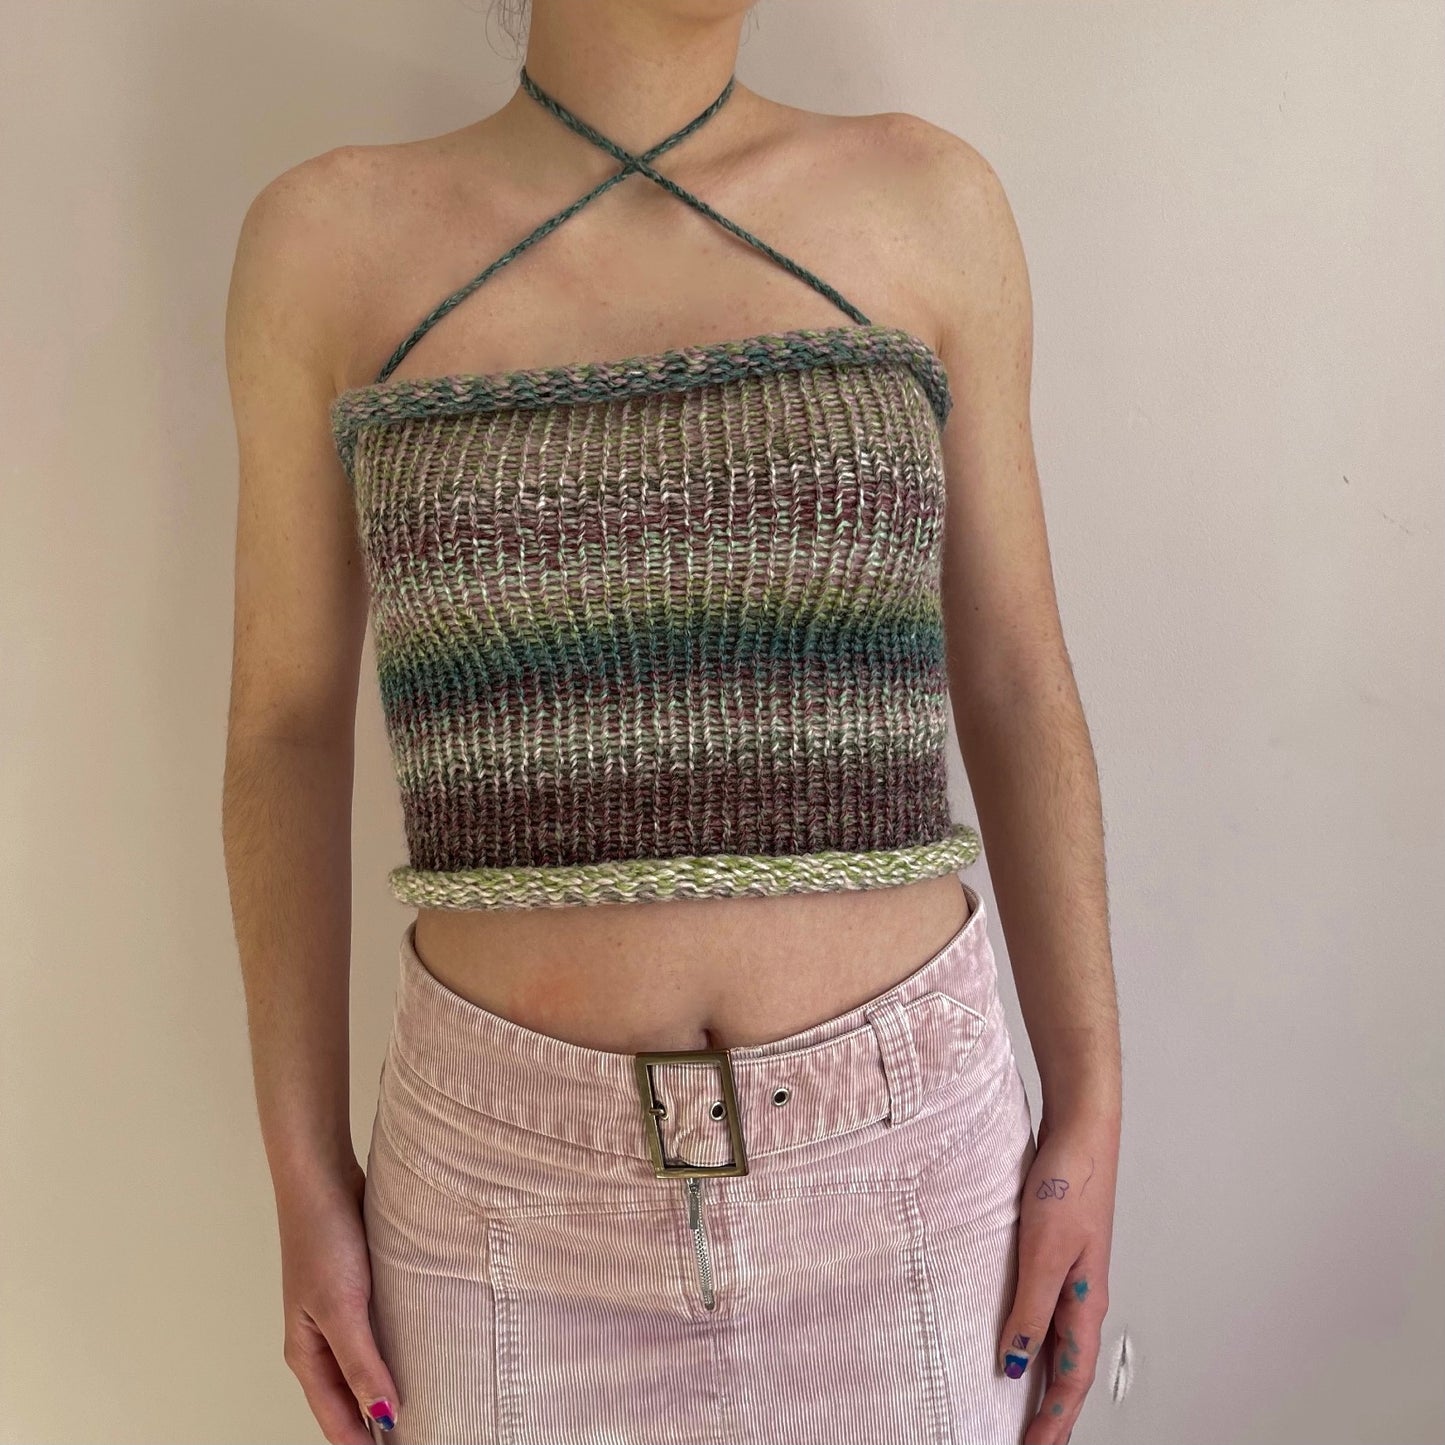 Handmade knitted criss cross halter top in dusky shades